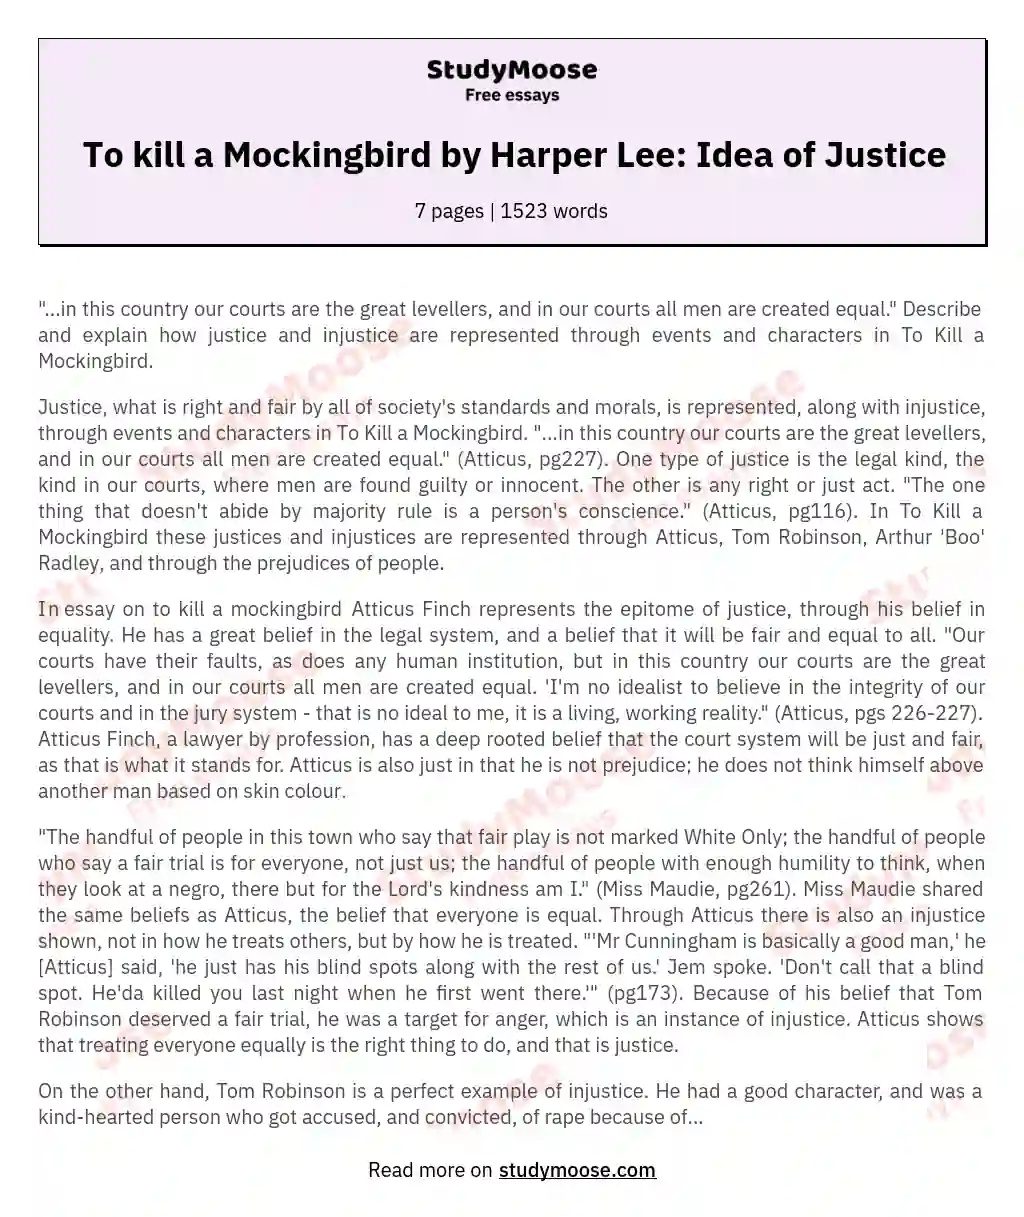 To kill a Mockingbird by Harper Lee: Idea of Justice